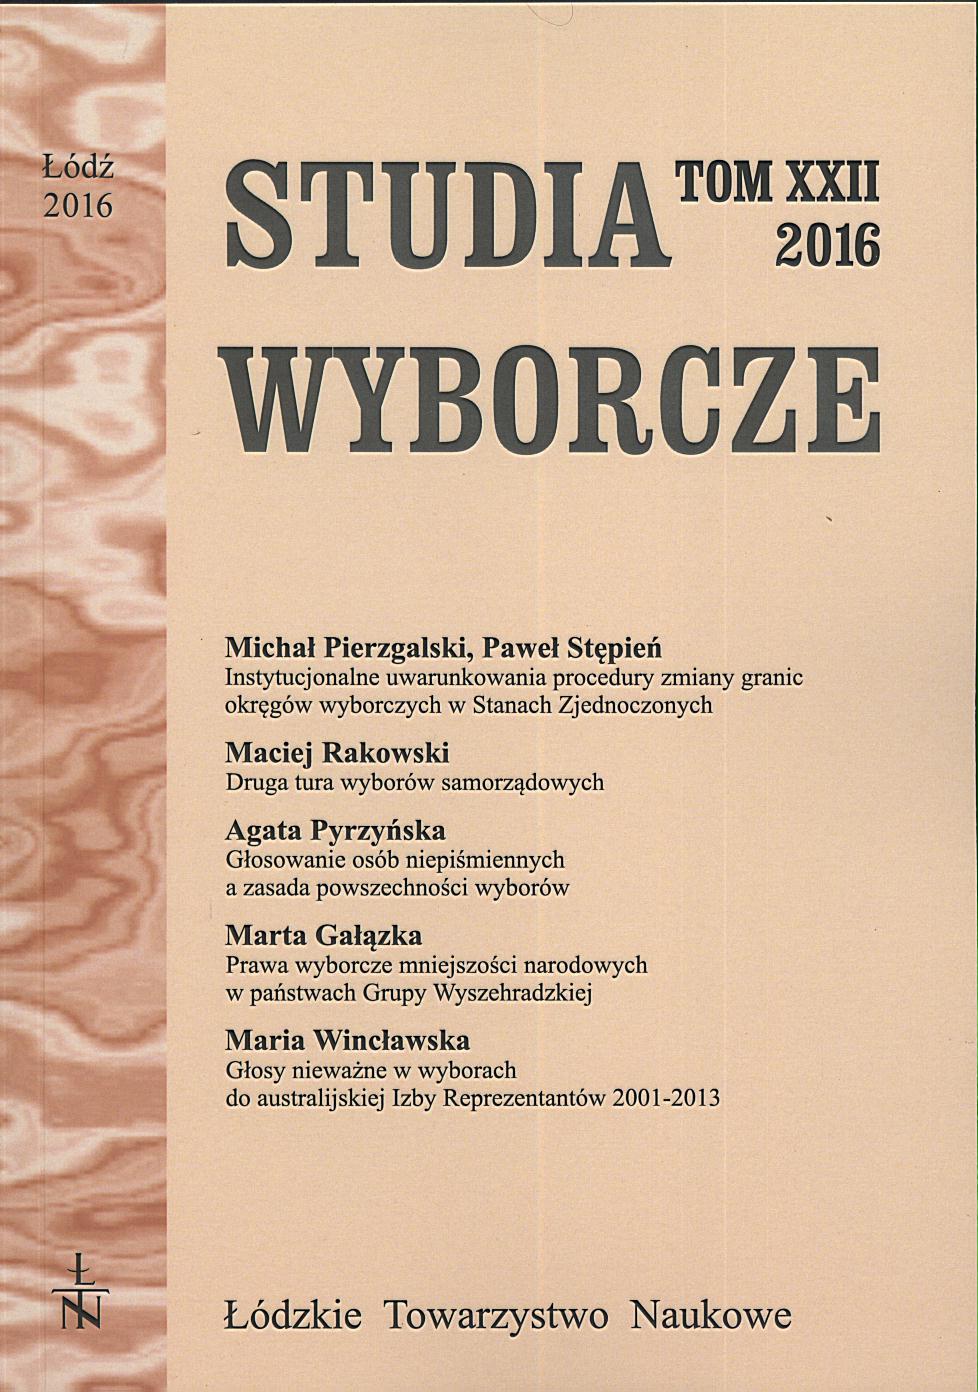 Polish electoral-referendum literature for 2015 Cover Image